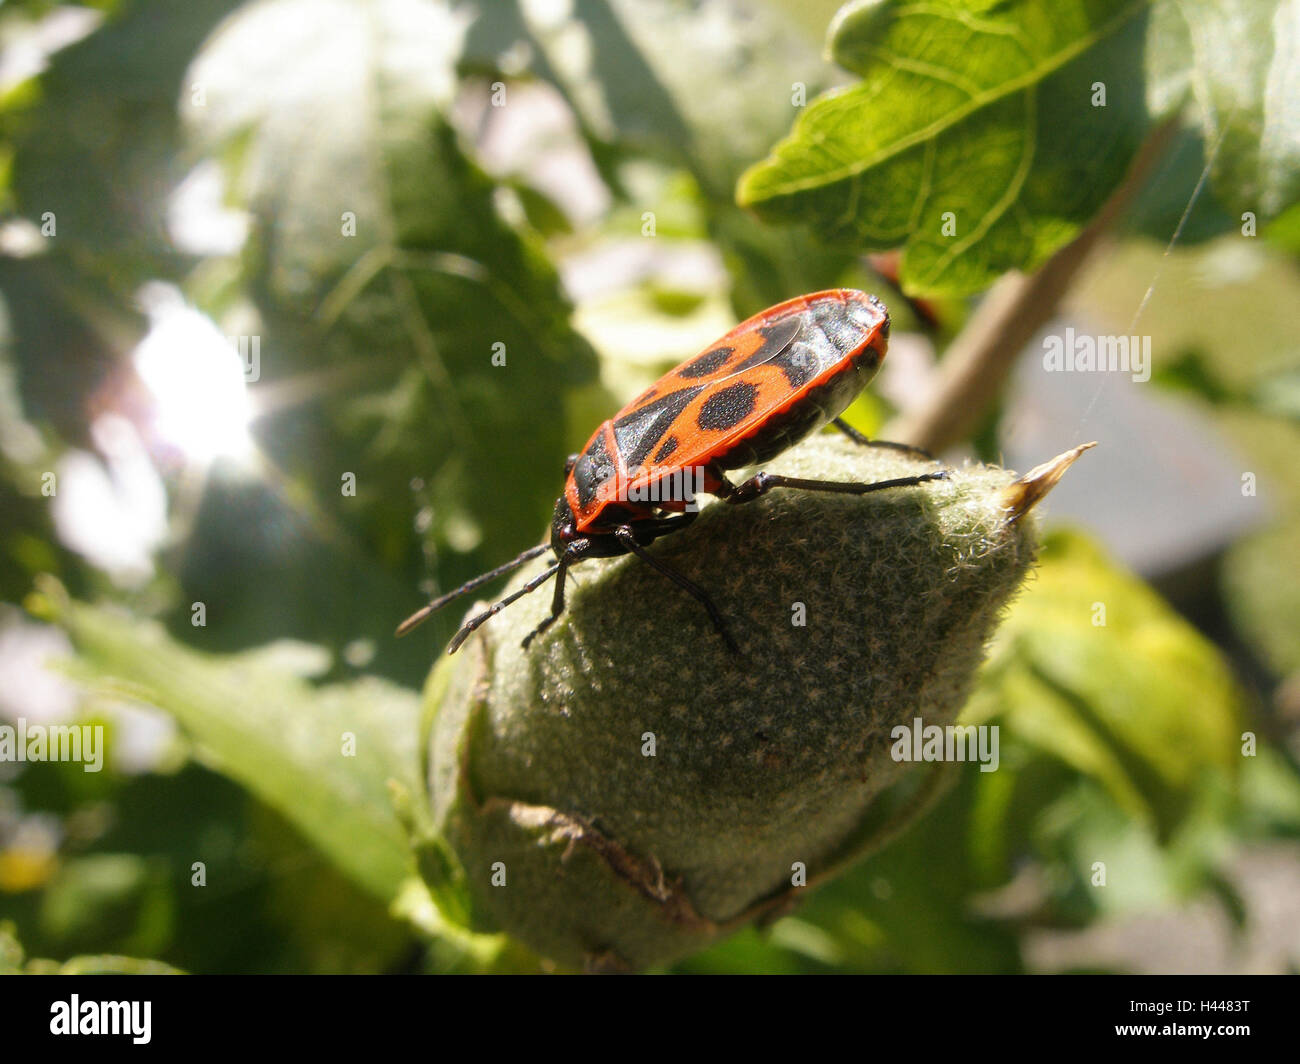 Common fire bug on bud, Stock Photo